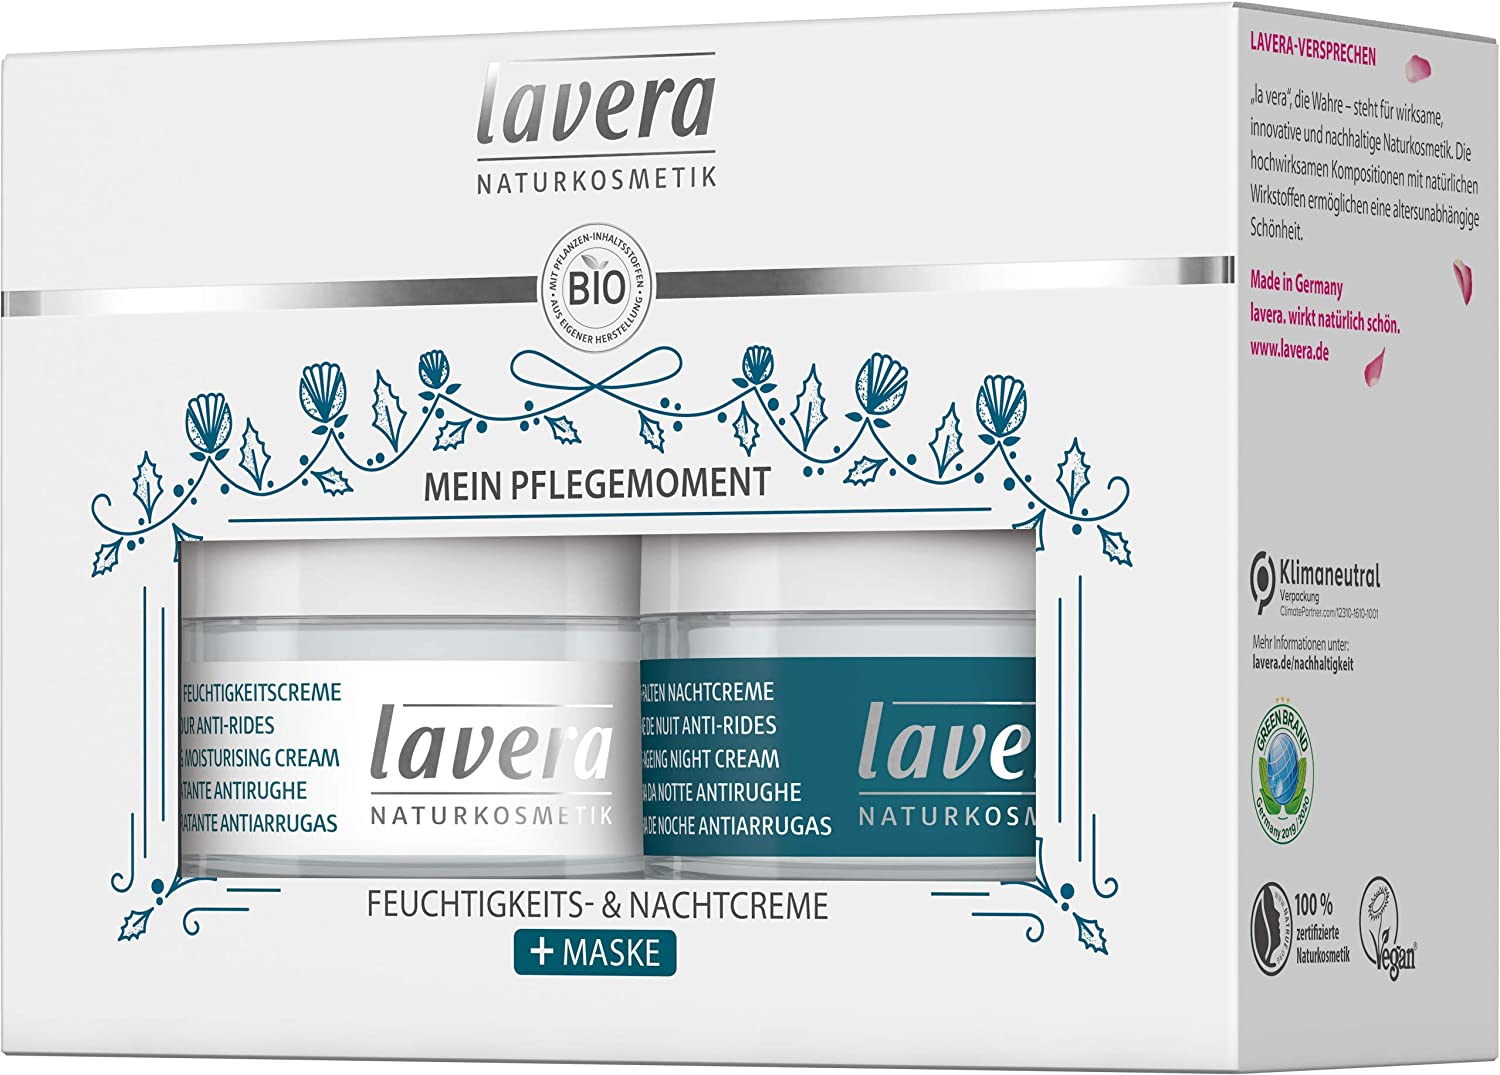 Lavera Gift Set My Care Moment – Contains 1x Basic Sensitive Anti-Wrinkle Moisturising Cream Q10 (50 ml) ✔ Natural Cosmetics ✔ Vegan ✔ Organic Ingredients ✔ Natural & Innovative, 100 ml